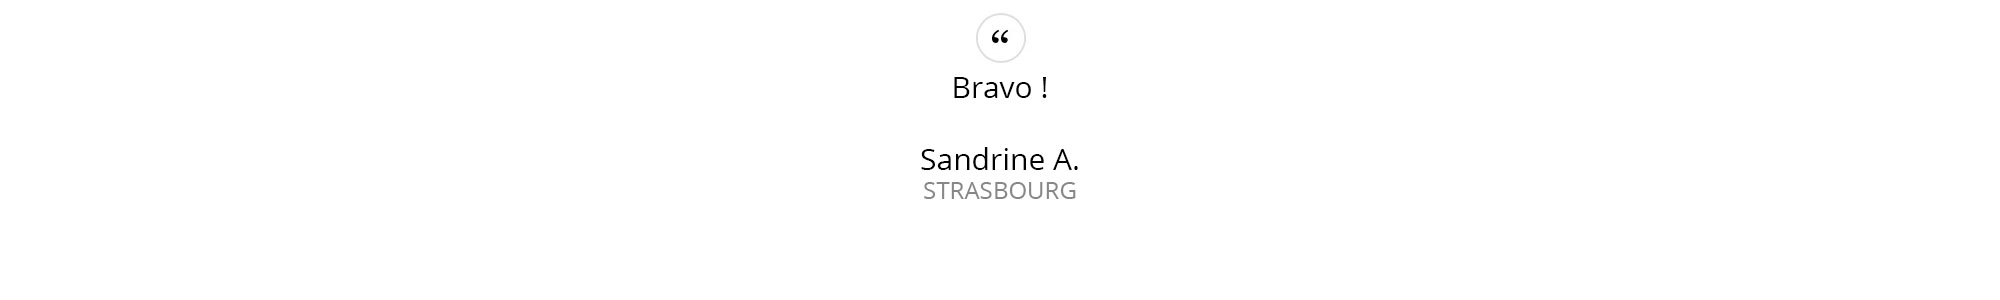 Sandrine-A.---STRASBOURG